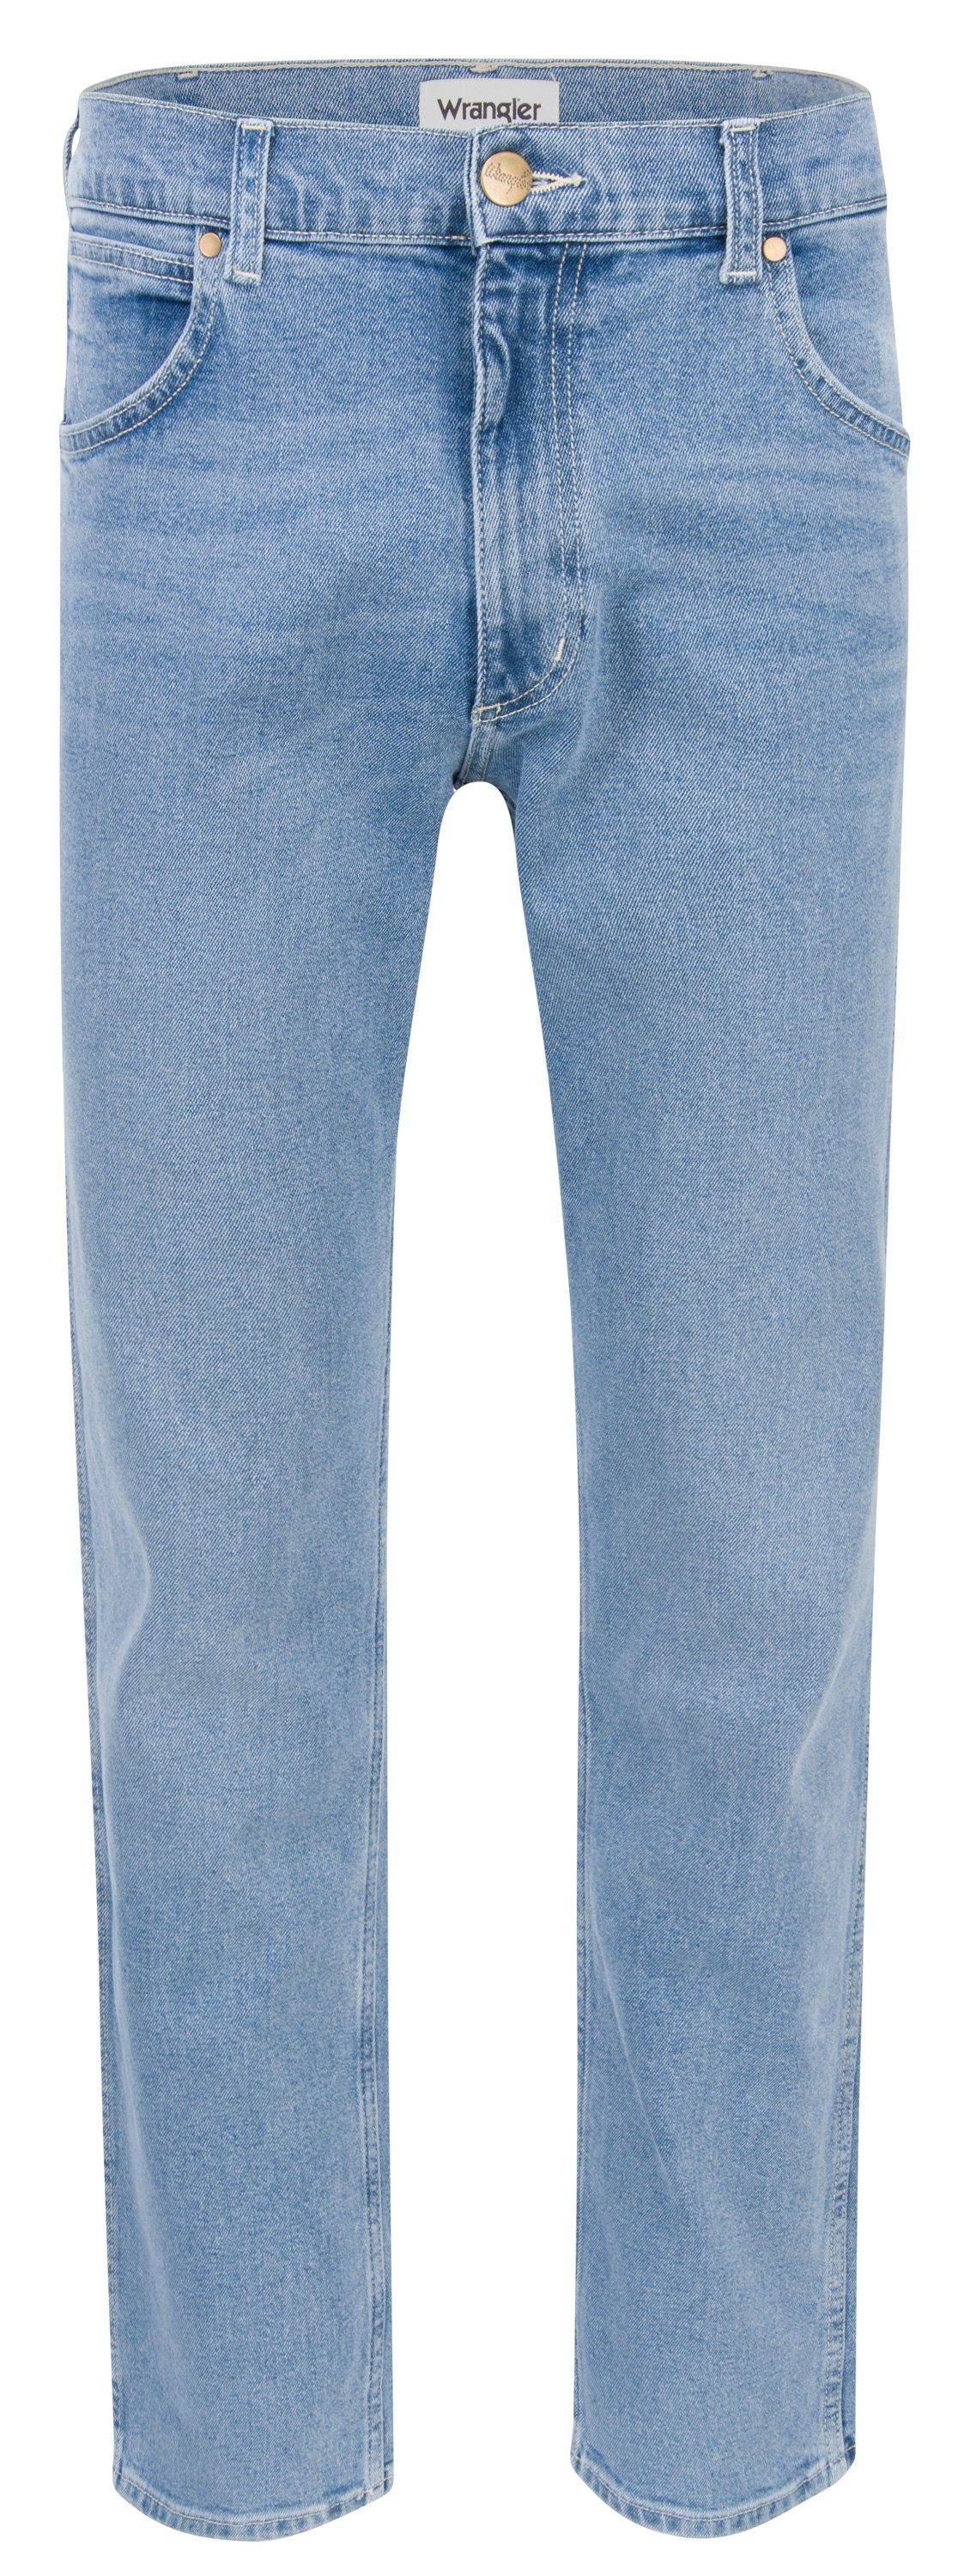 Wrangler 5-Pocket-Jeans WRANGLER GREENSBORO moonstone W15QKP63W